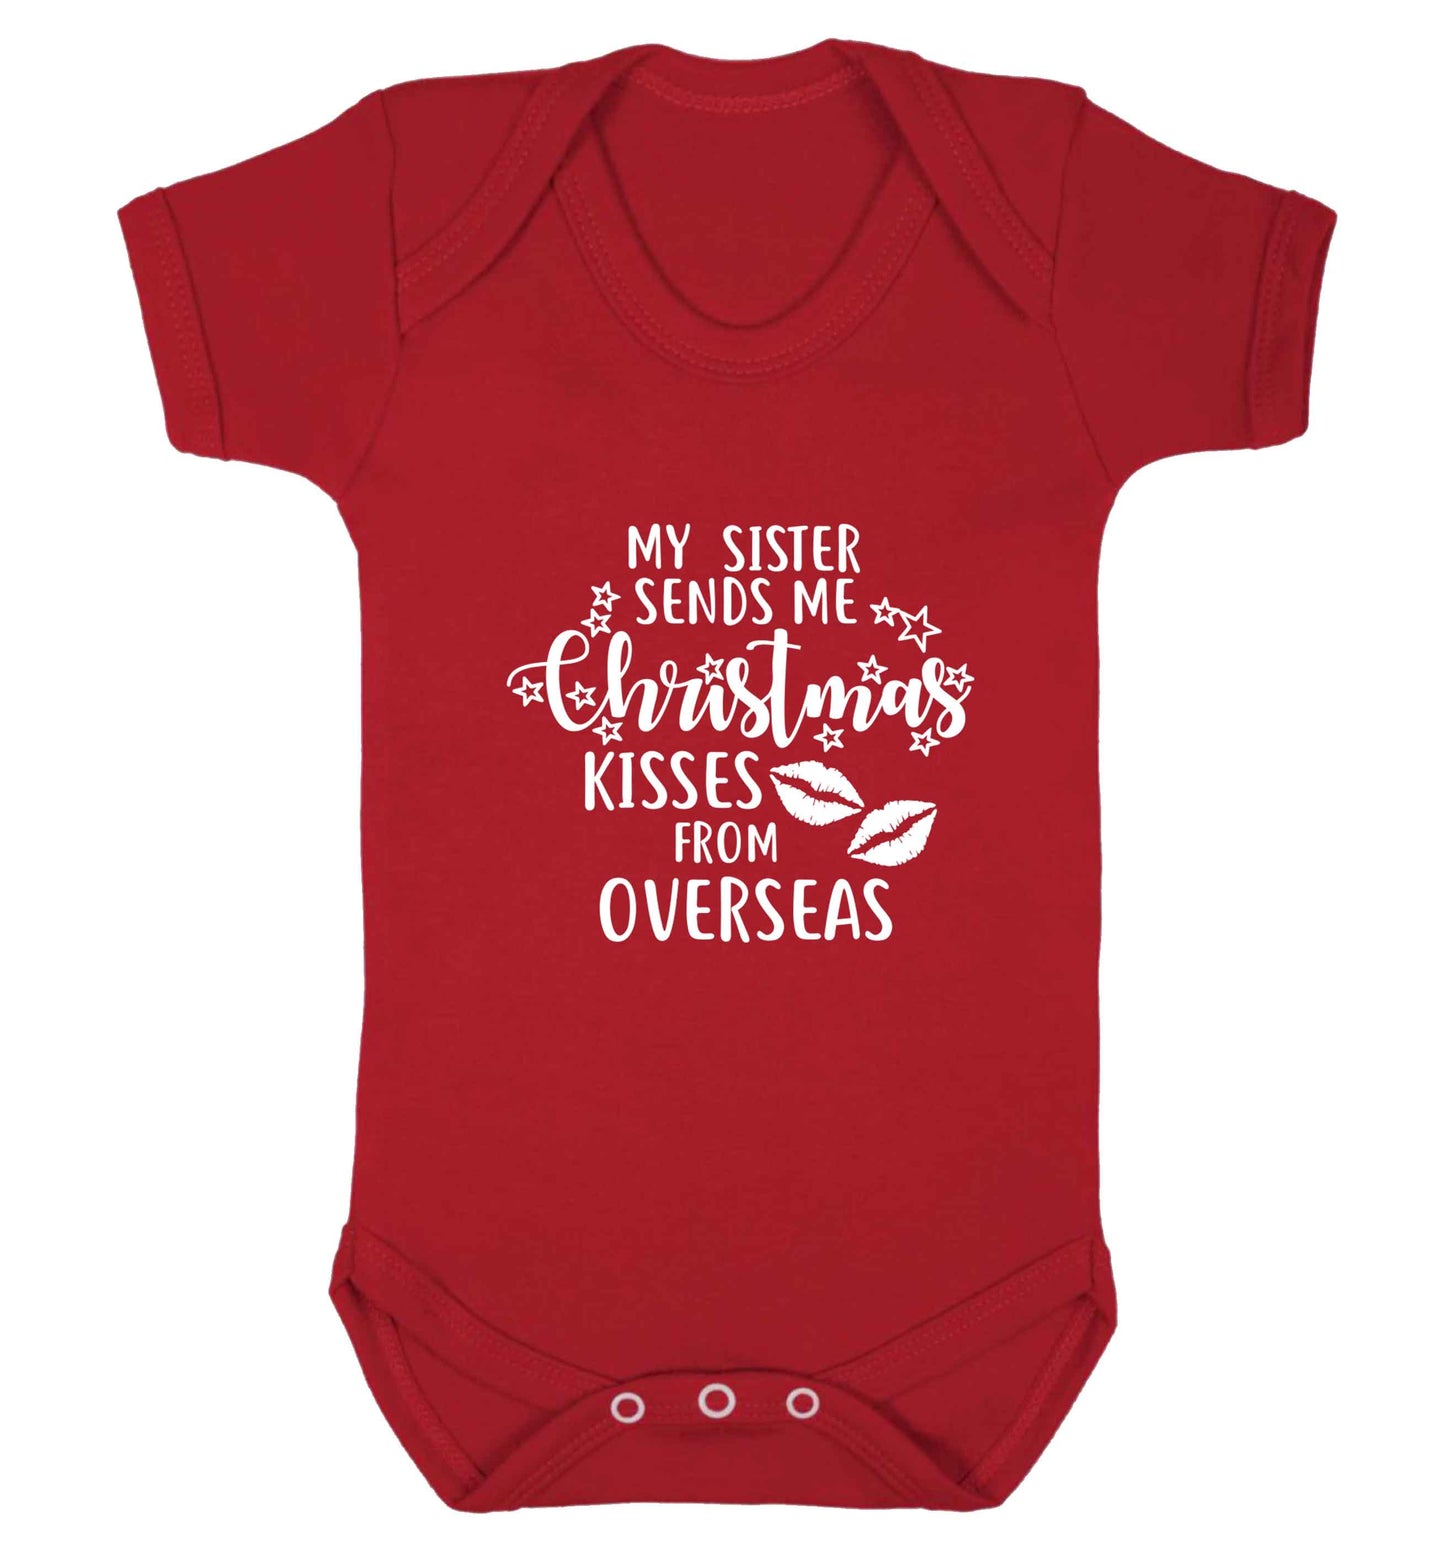 Grandad Christmas Kisses Overseas baby vest red 18-24 months